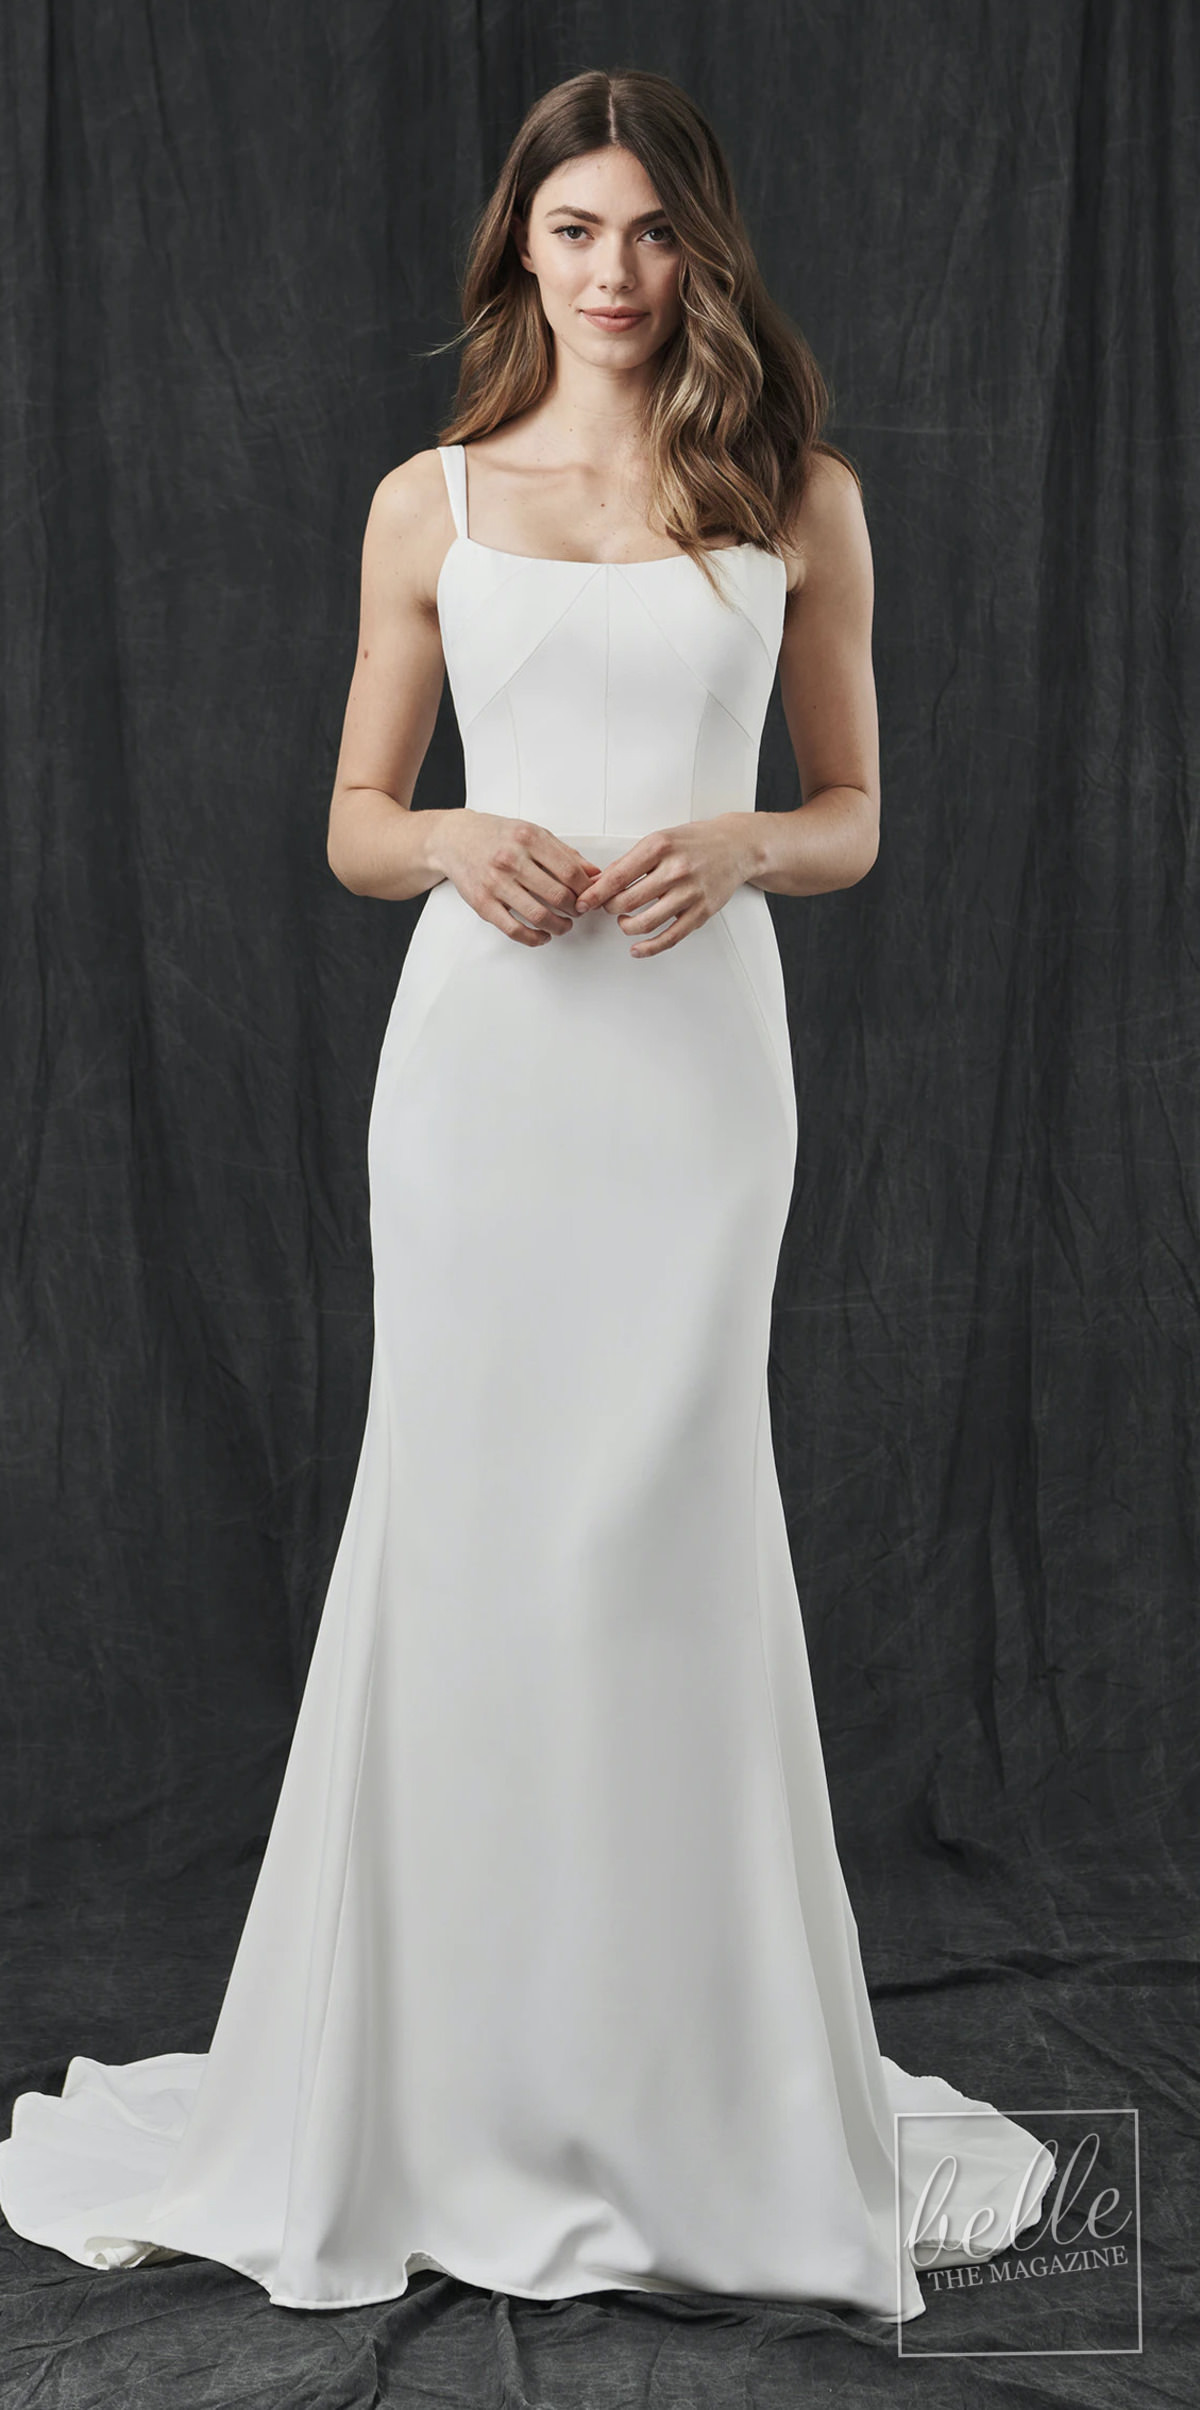 Wedding dress trends 2021 - Minimalist gown - KELLY FAETANINI - Redux Zara